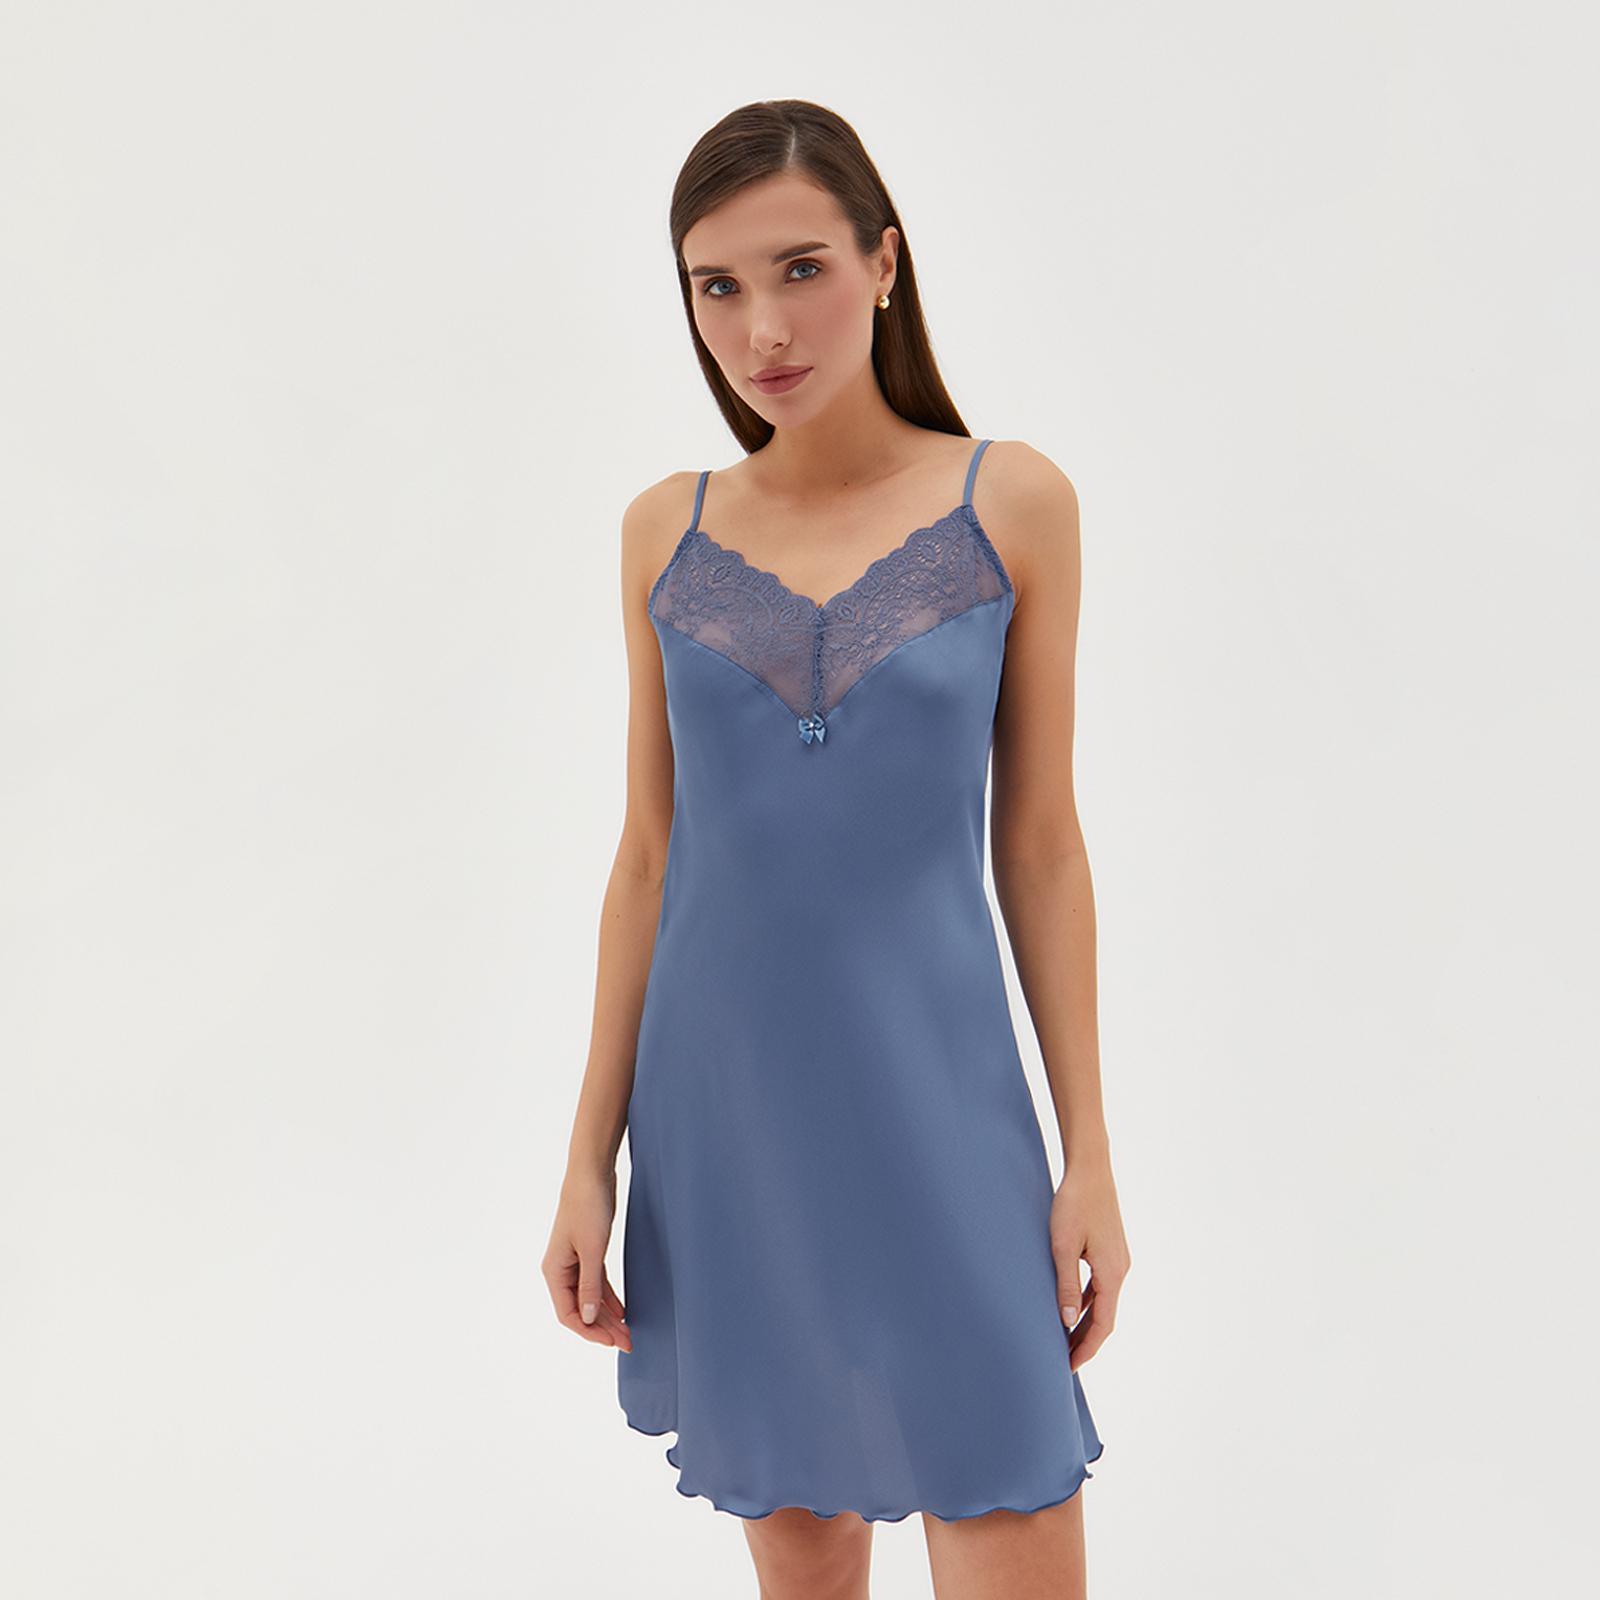 Сорочка Alisma, сапфир CozyHome, цвет синий, размер 42